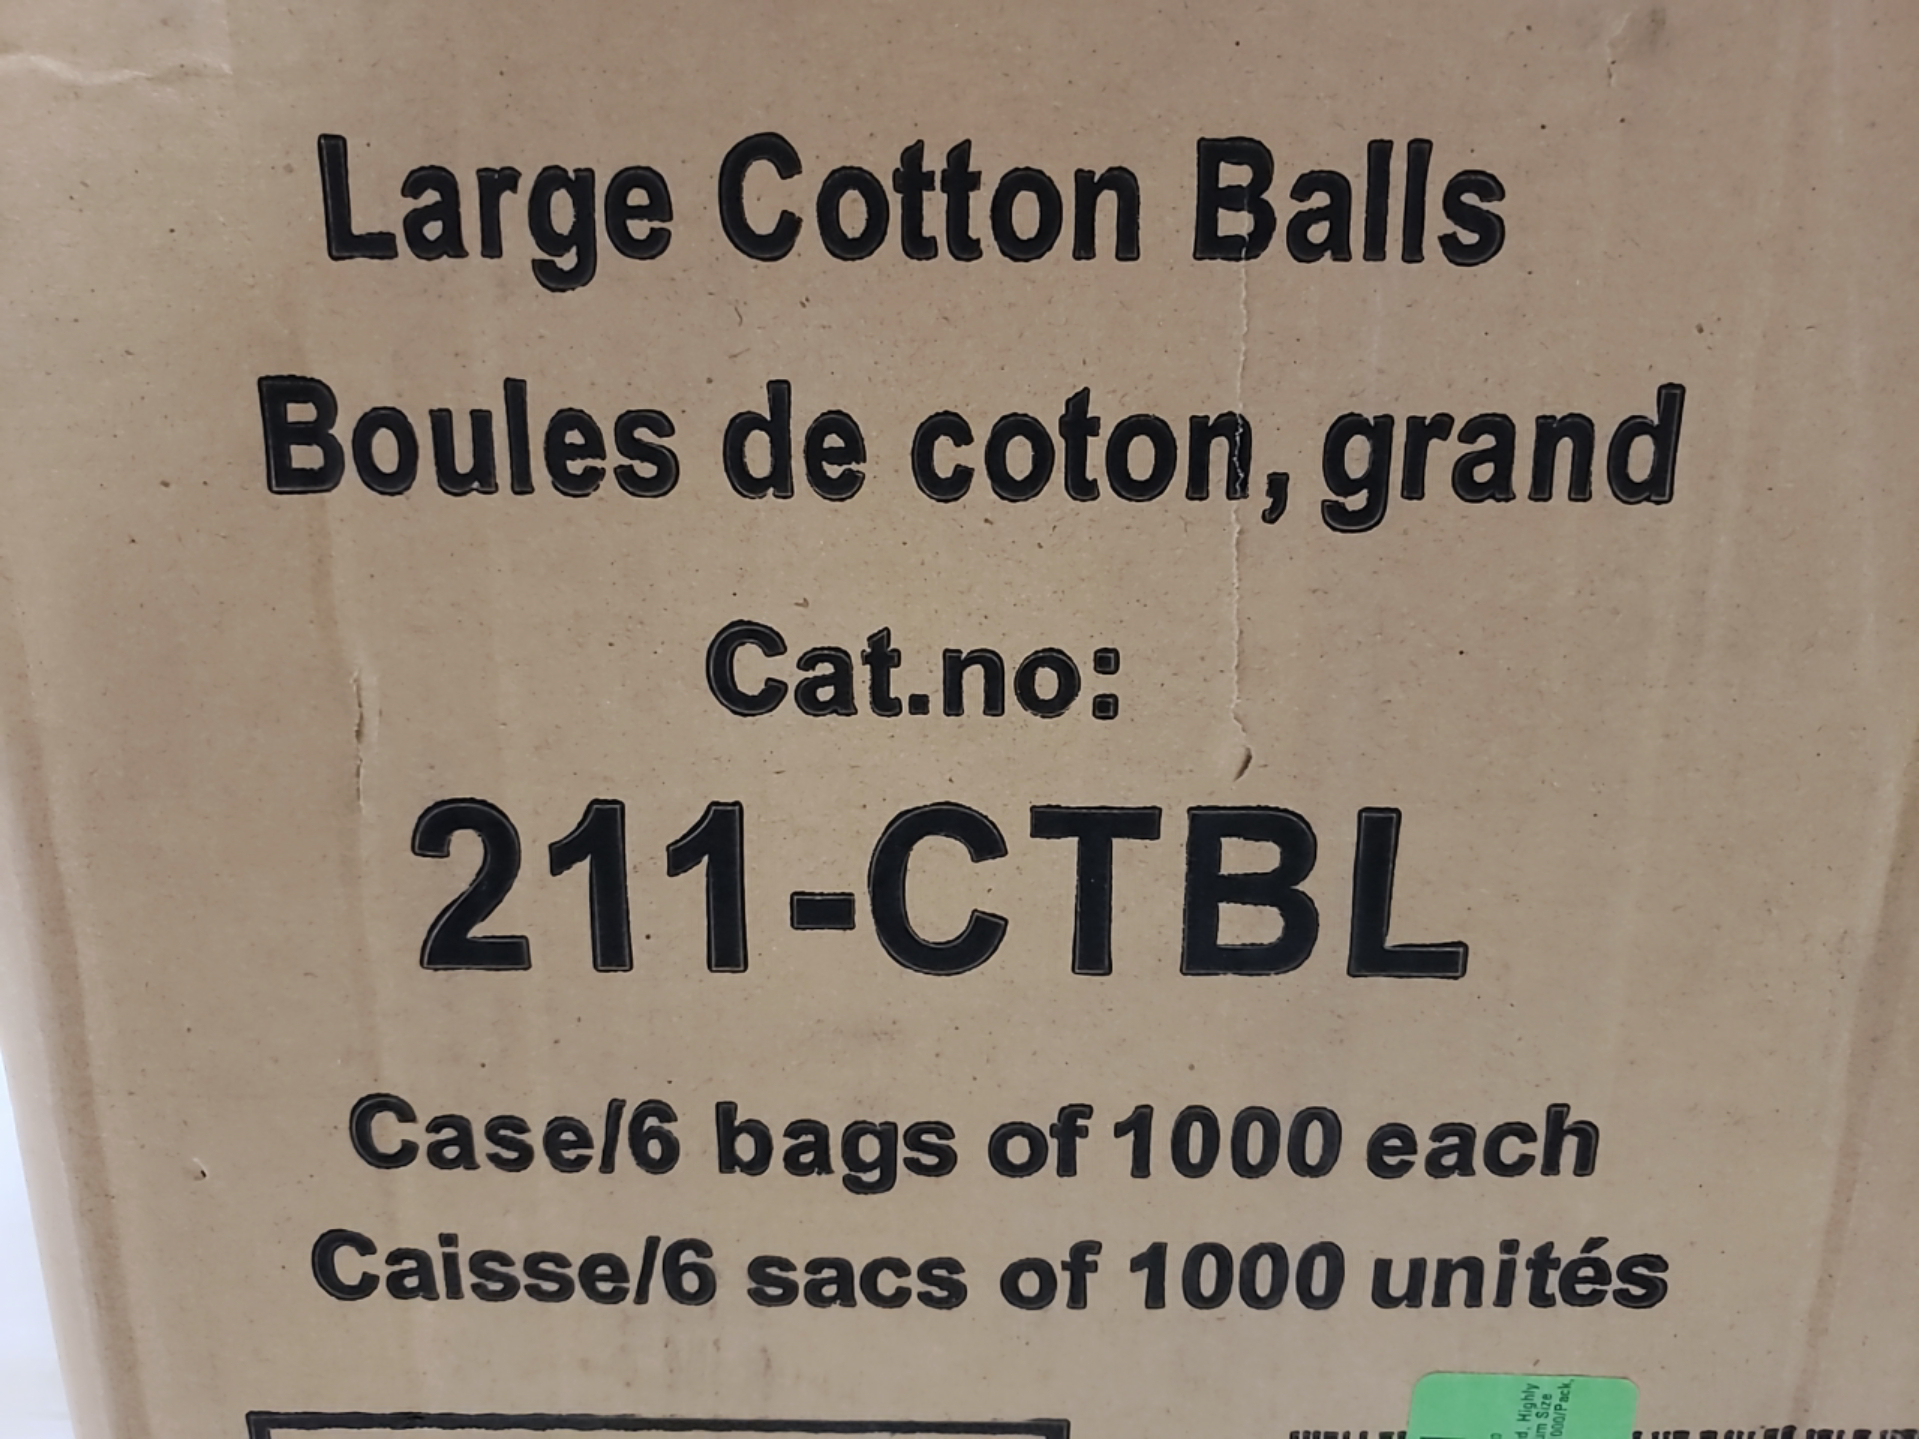 Large Non-Sterile Cotton Balls, 1000/Bag